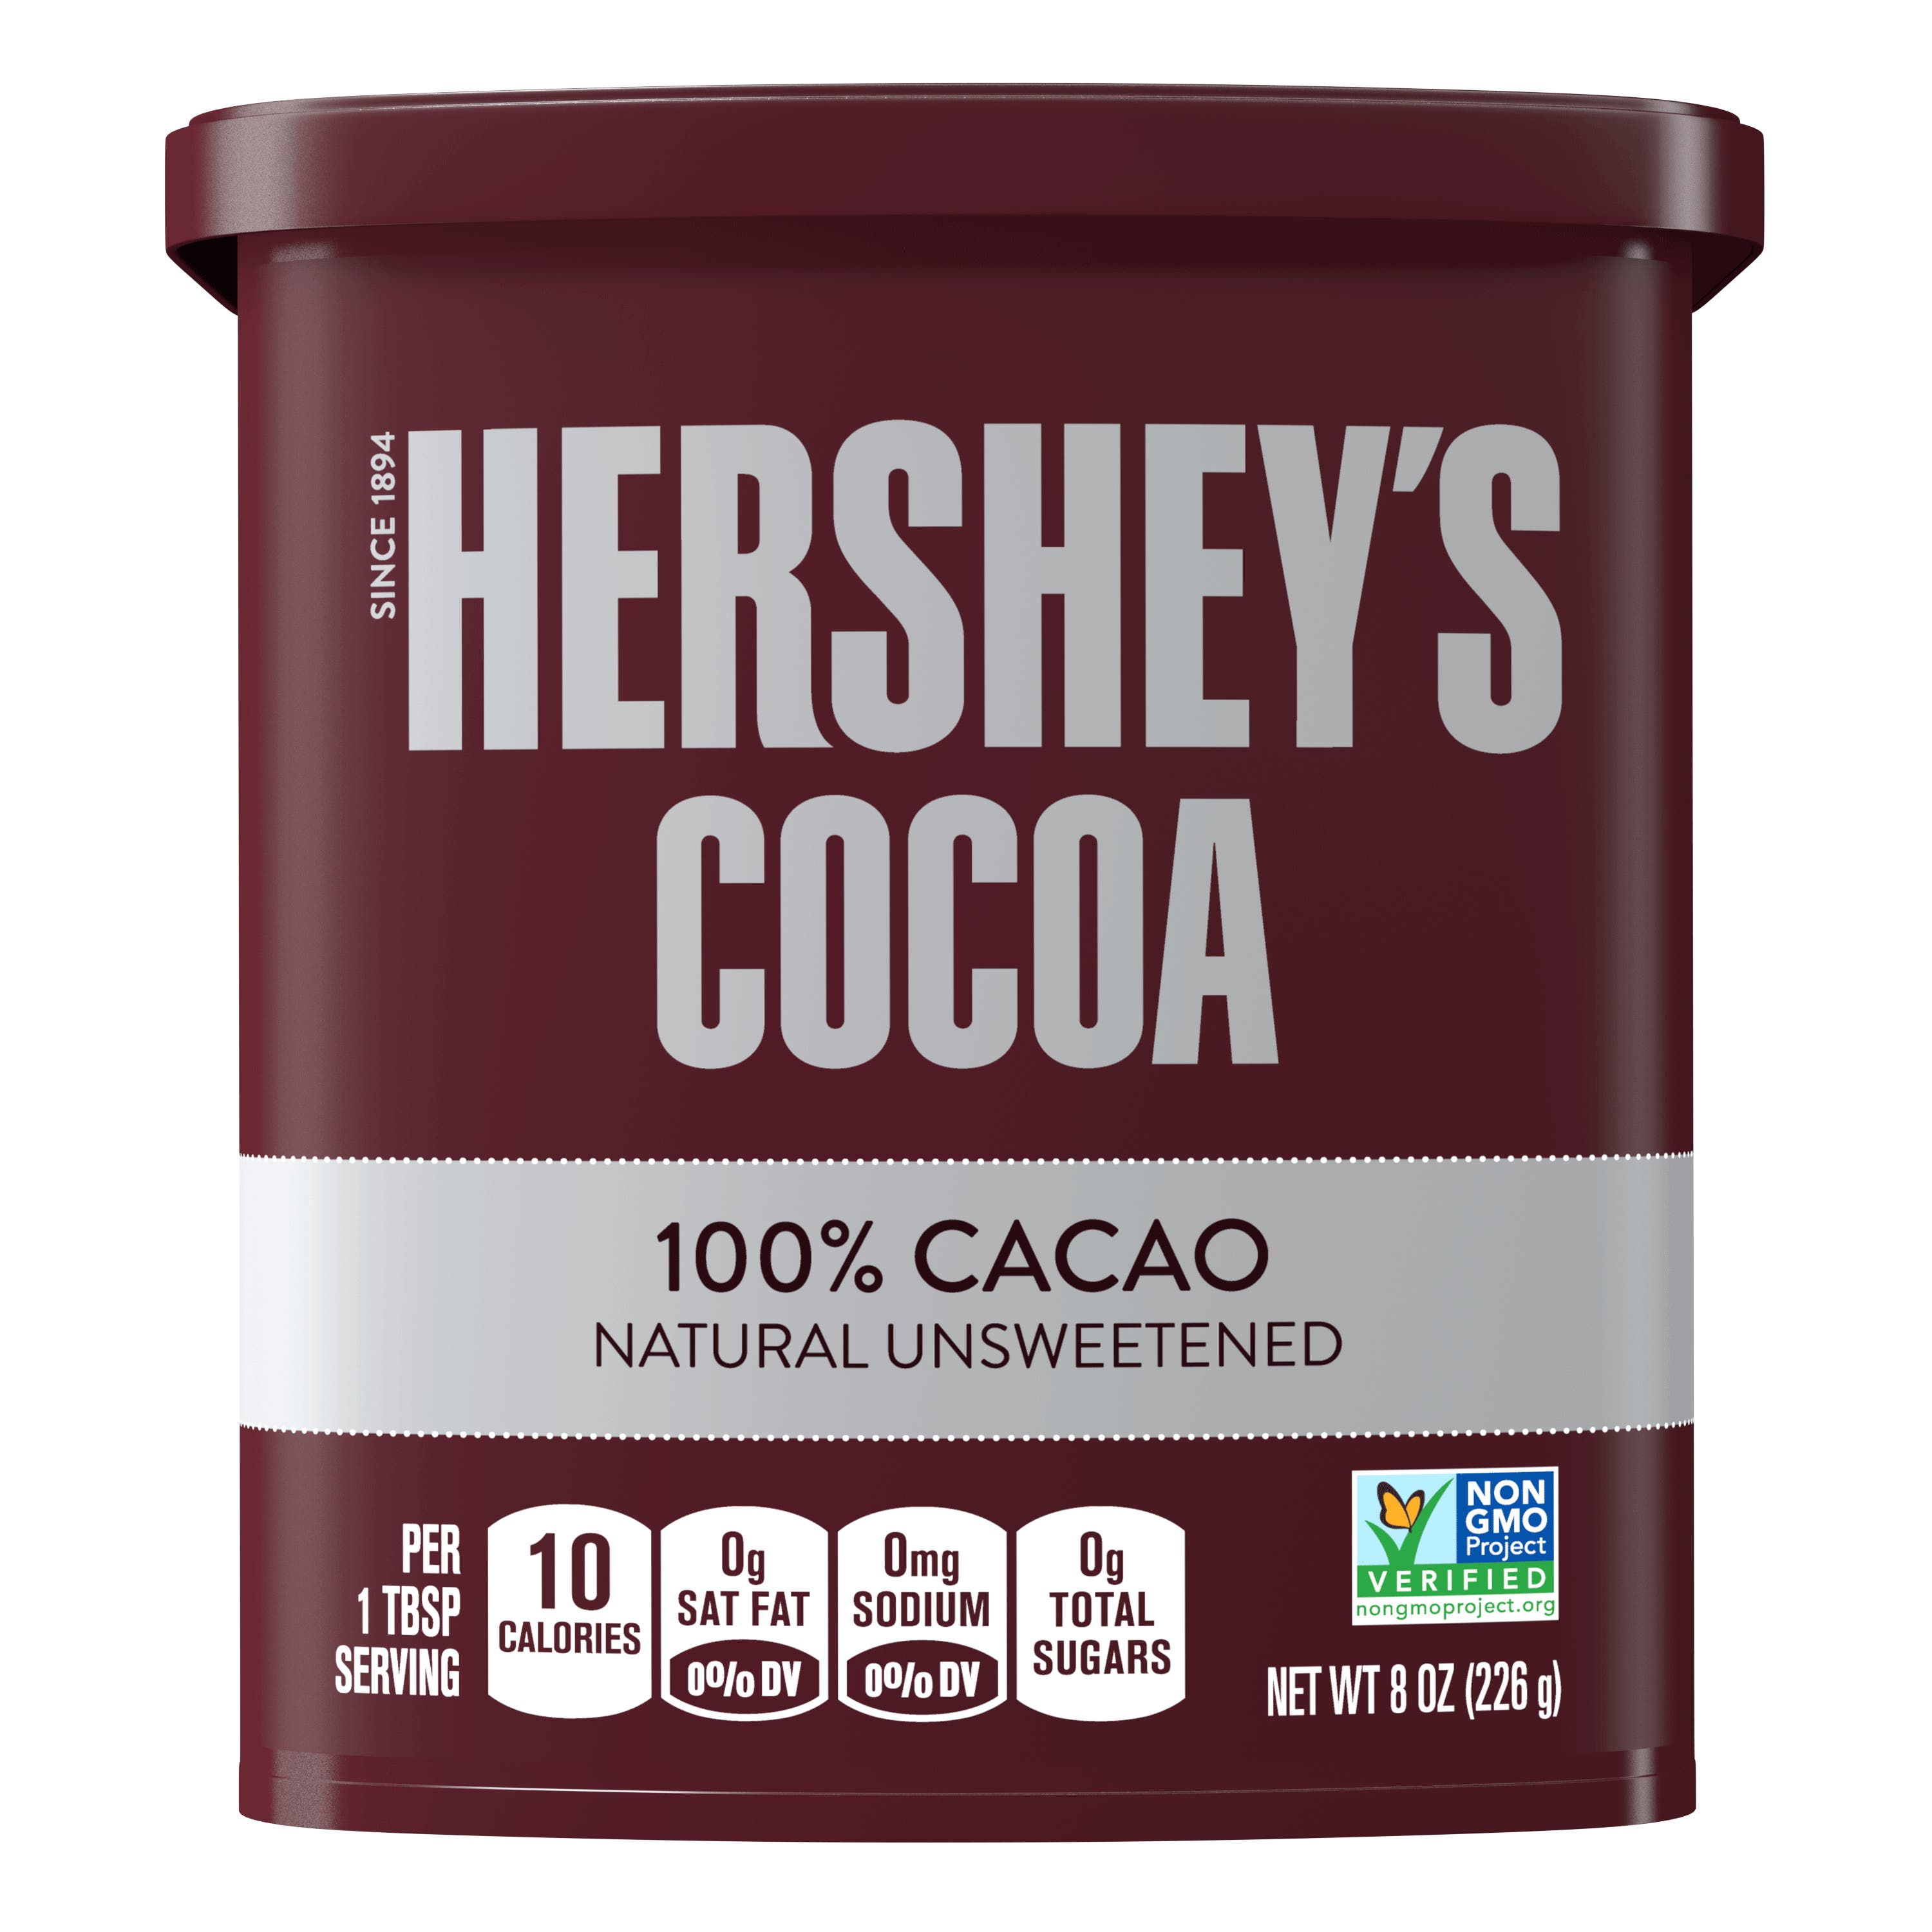 Hershey's 100% Cacao Cocoa